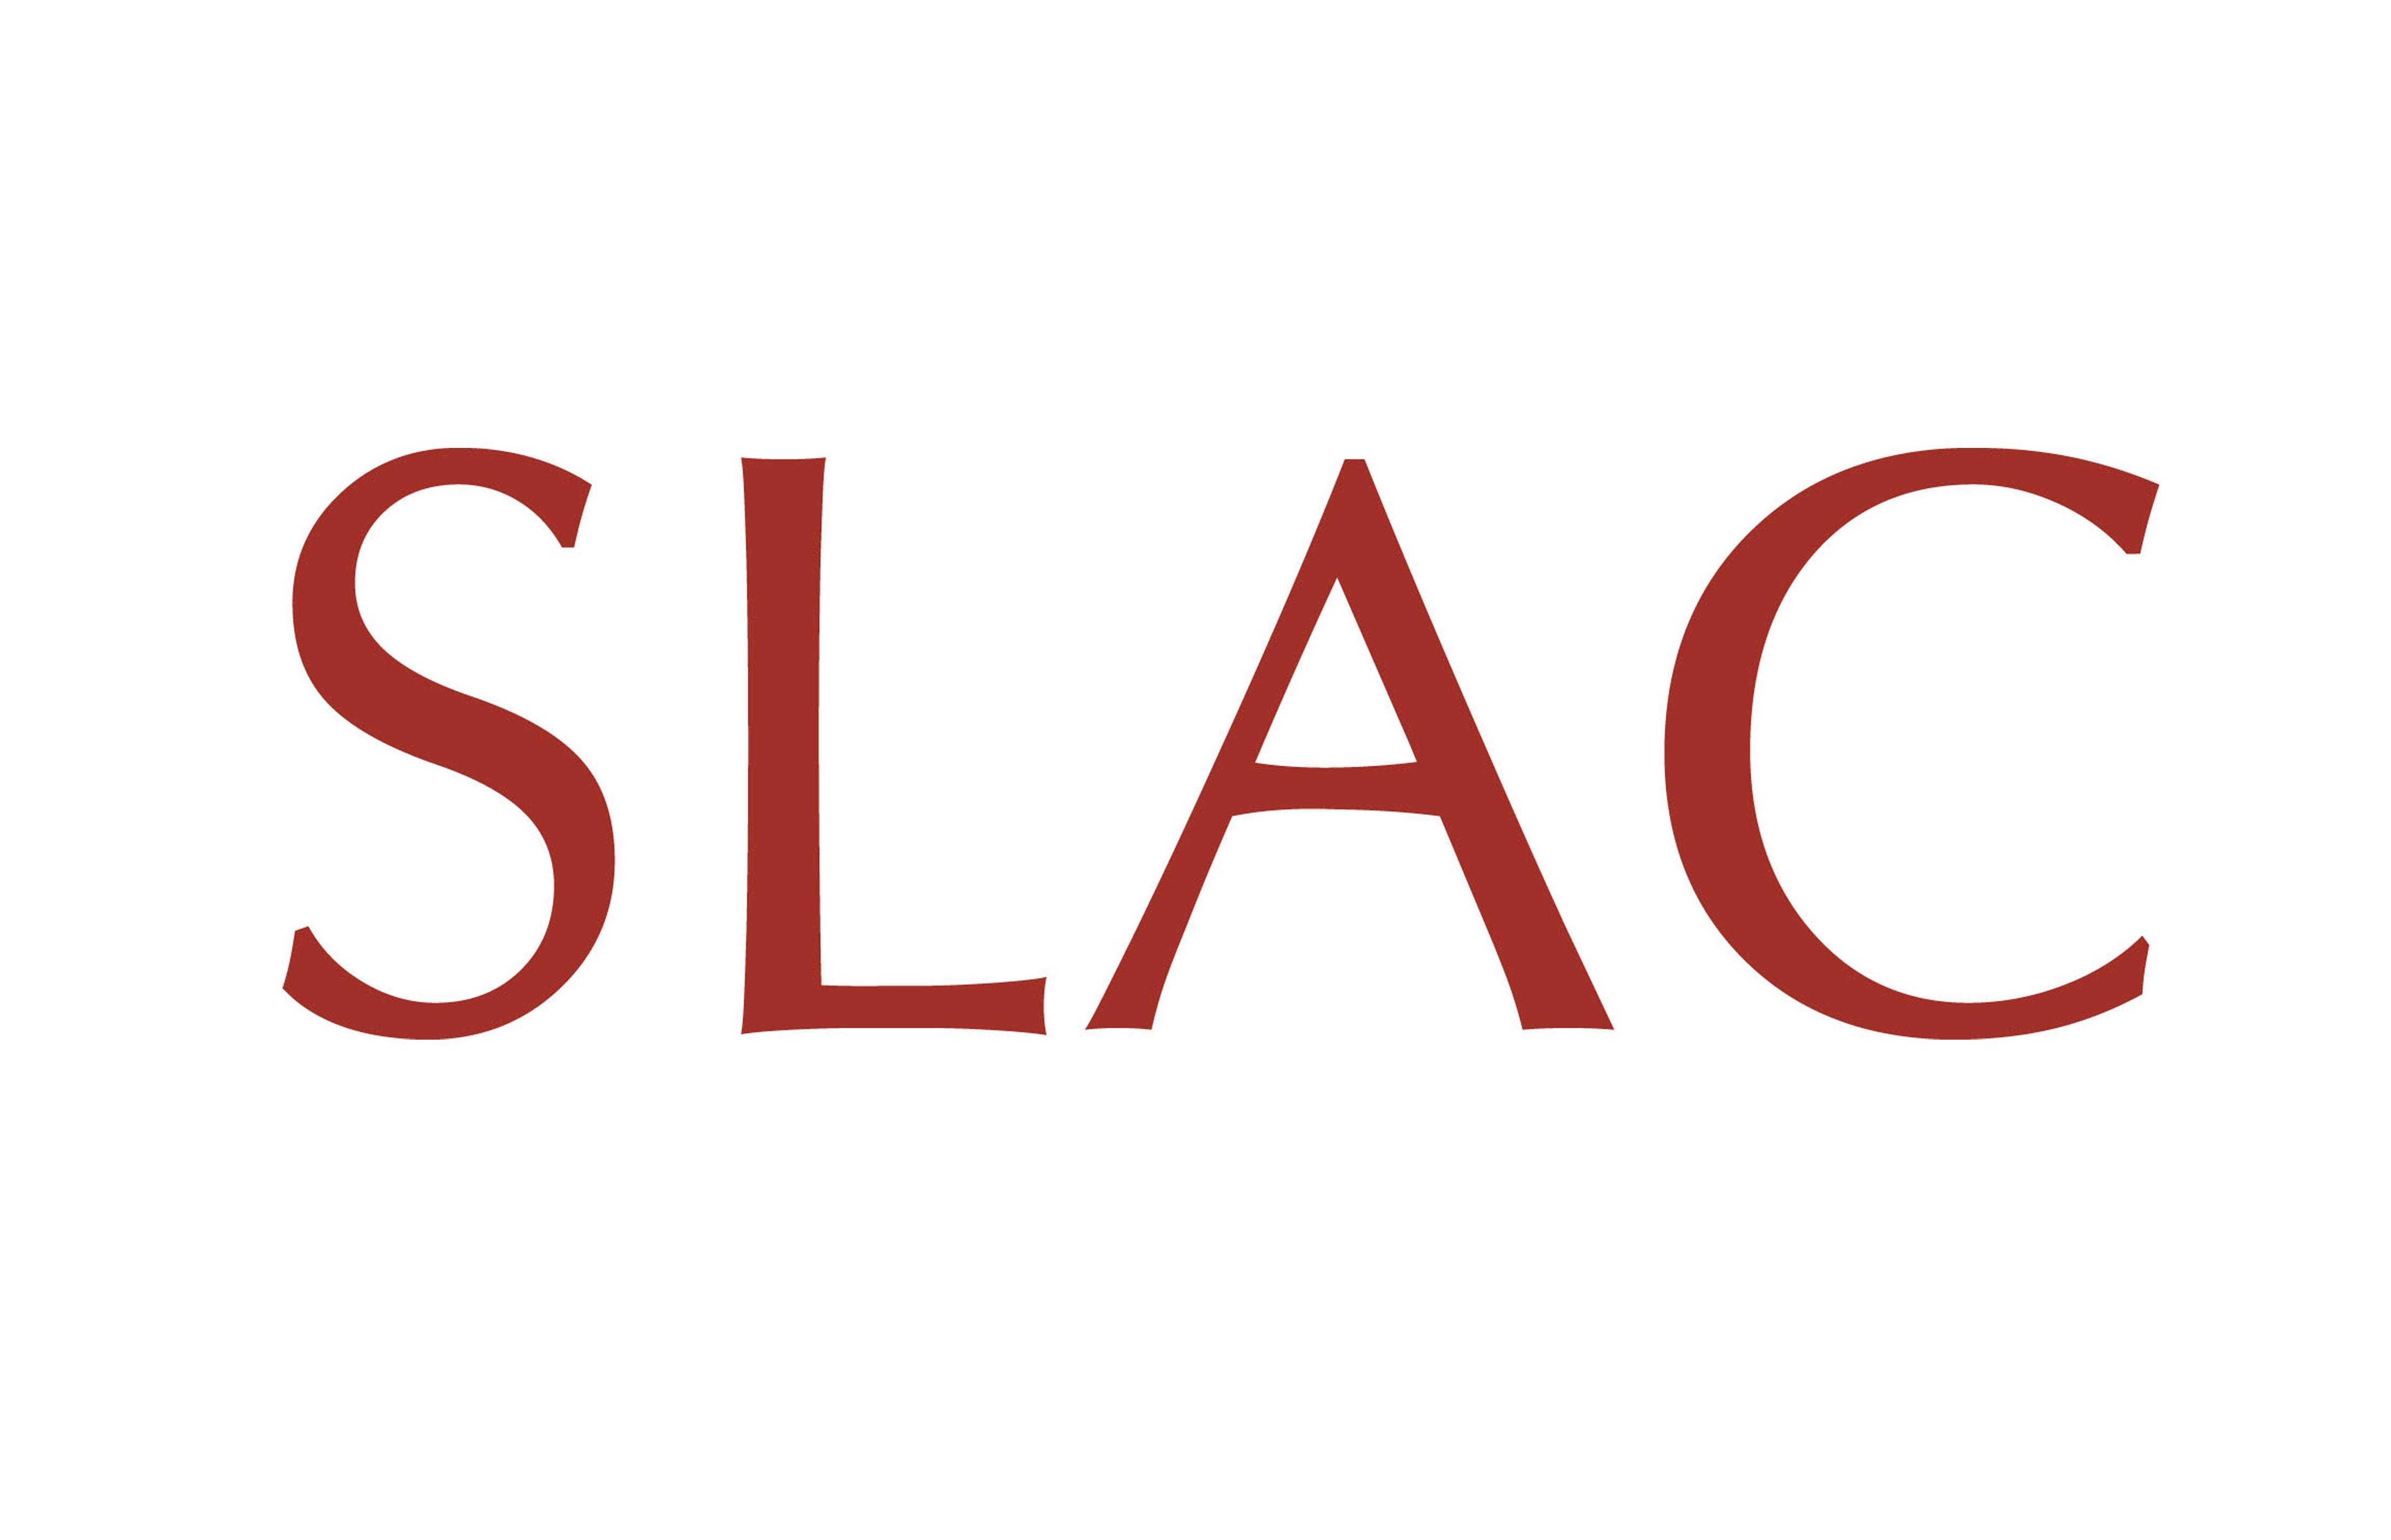 SLAC Logo - ridl.cfd.rit.edu - /docs/posters/proposal posters/logos and images ...